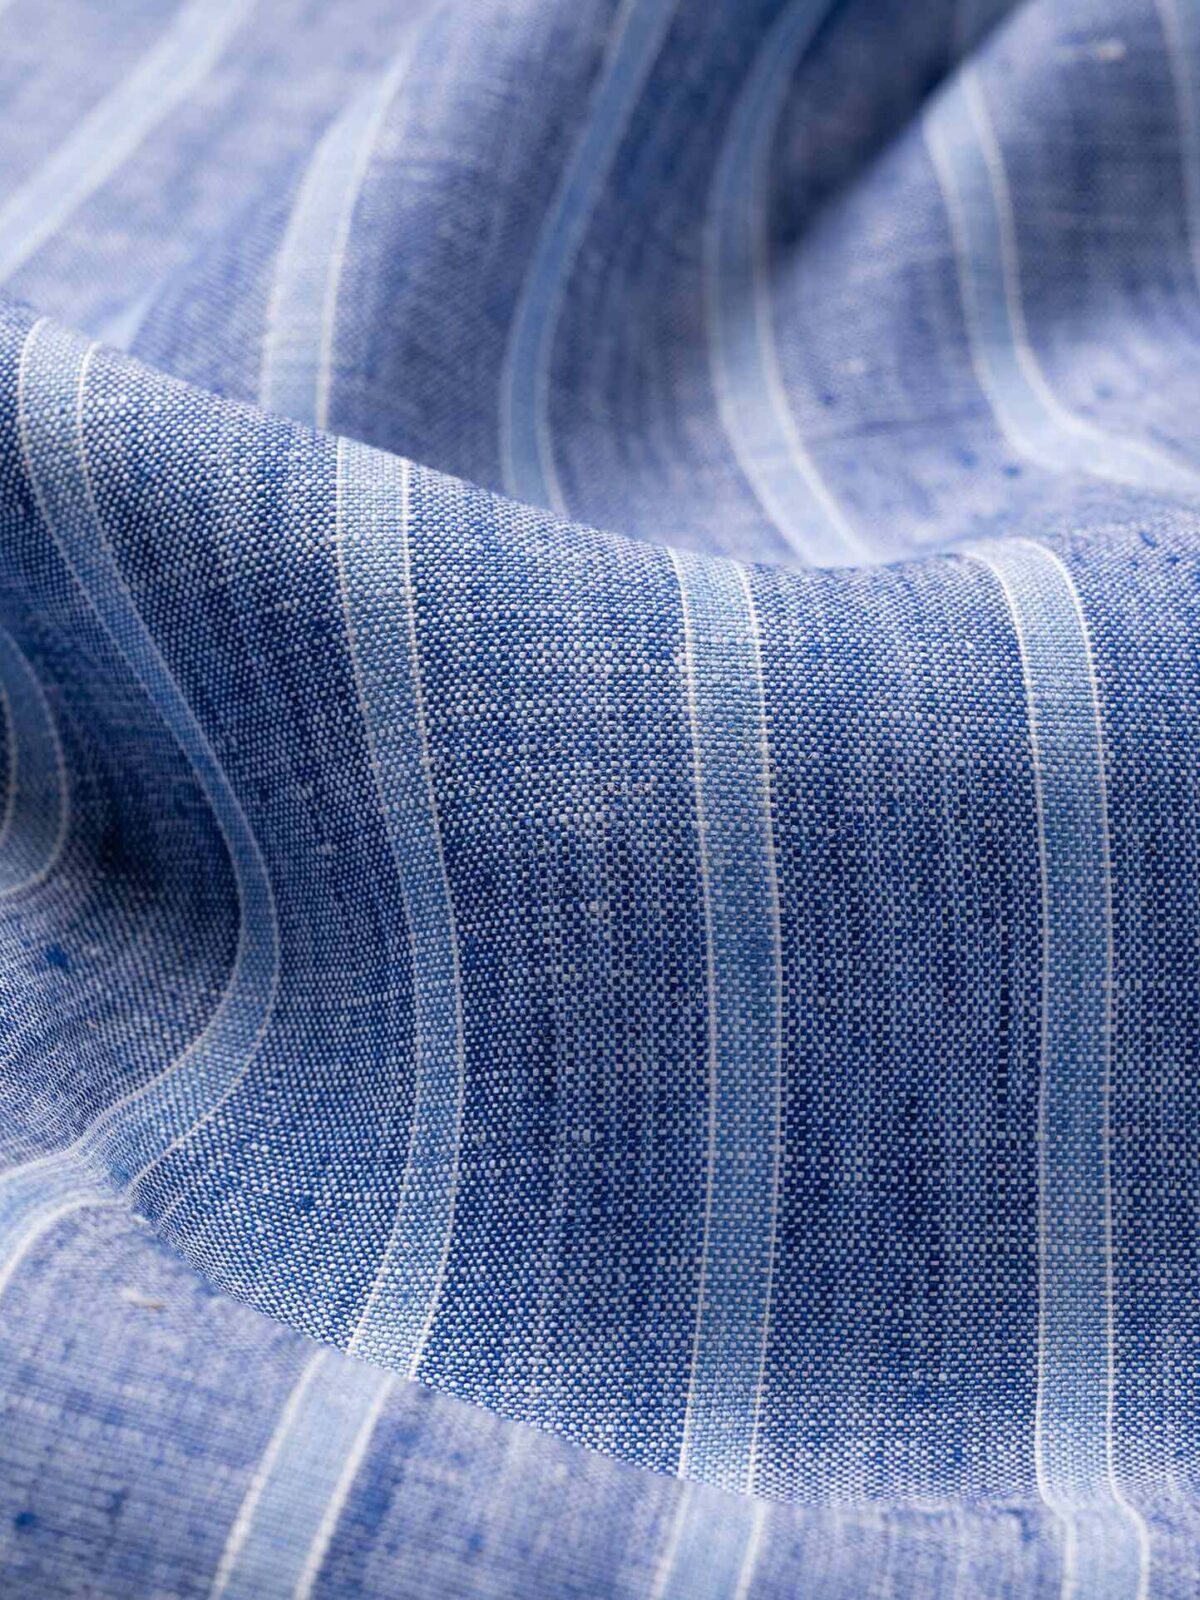 Positano Blue Wide Stripe Italian Linen Shirts by Proper Cloth